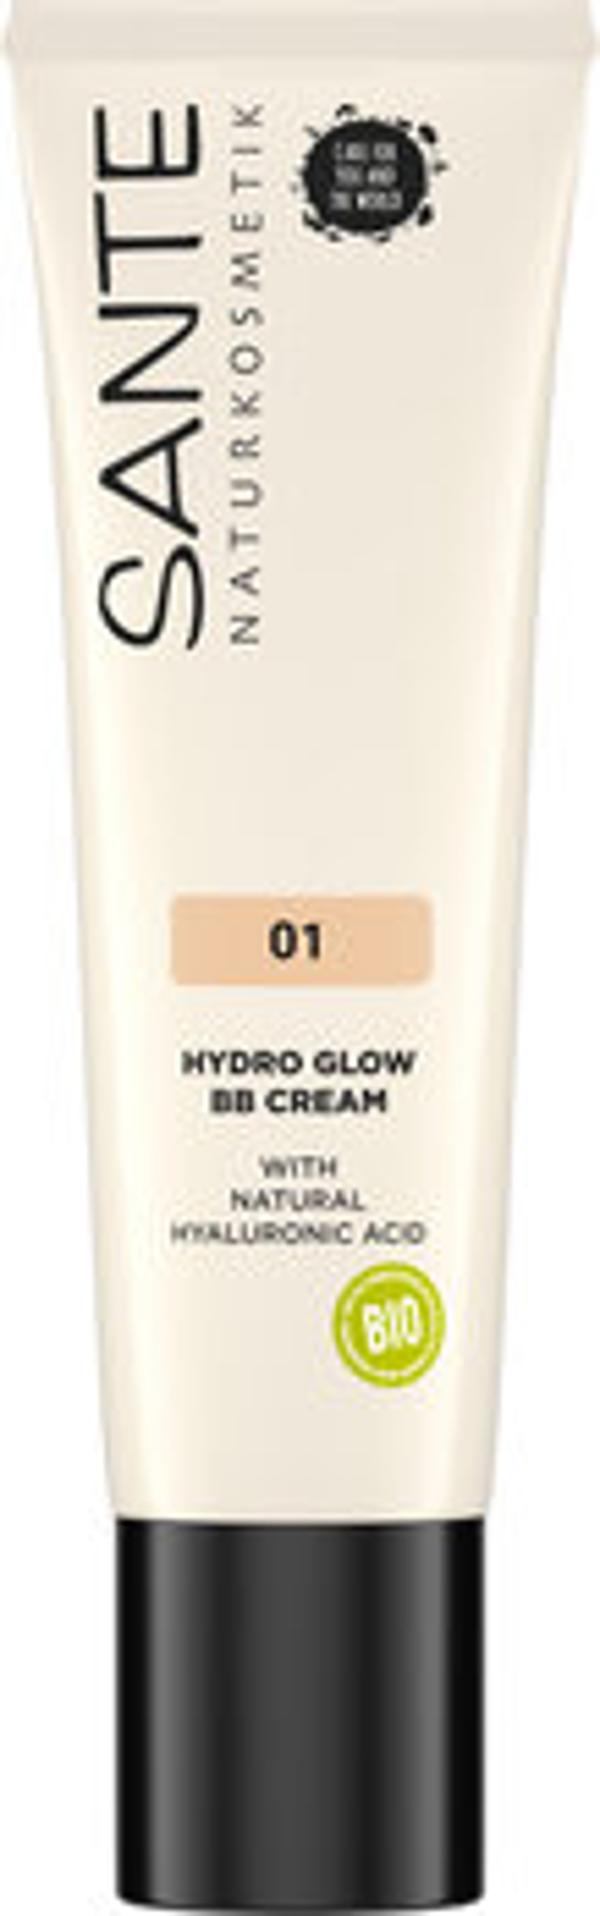 Produktfoto zu Hydro Glow BB Cream 01 Light-Medium 30ml